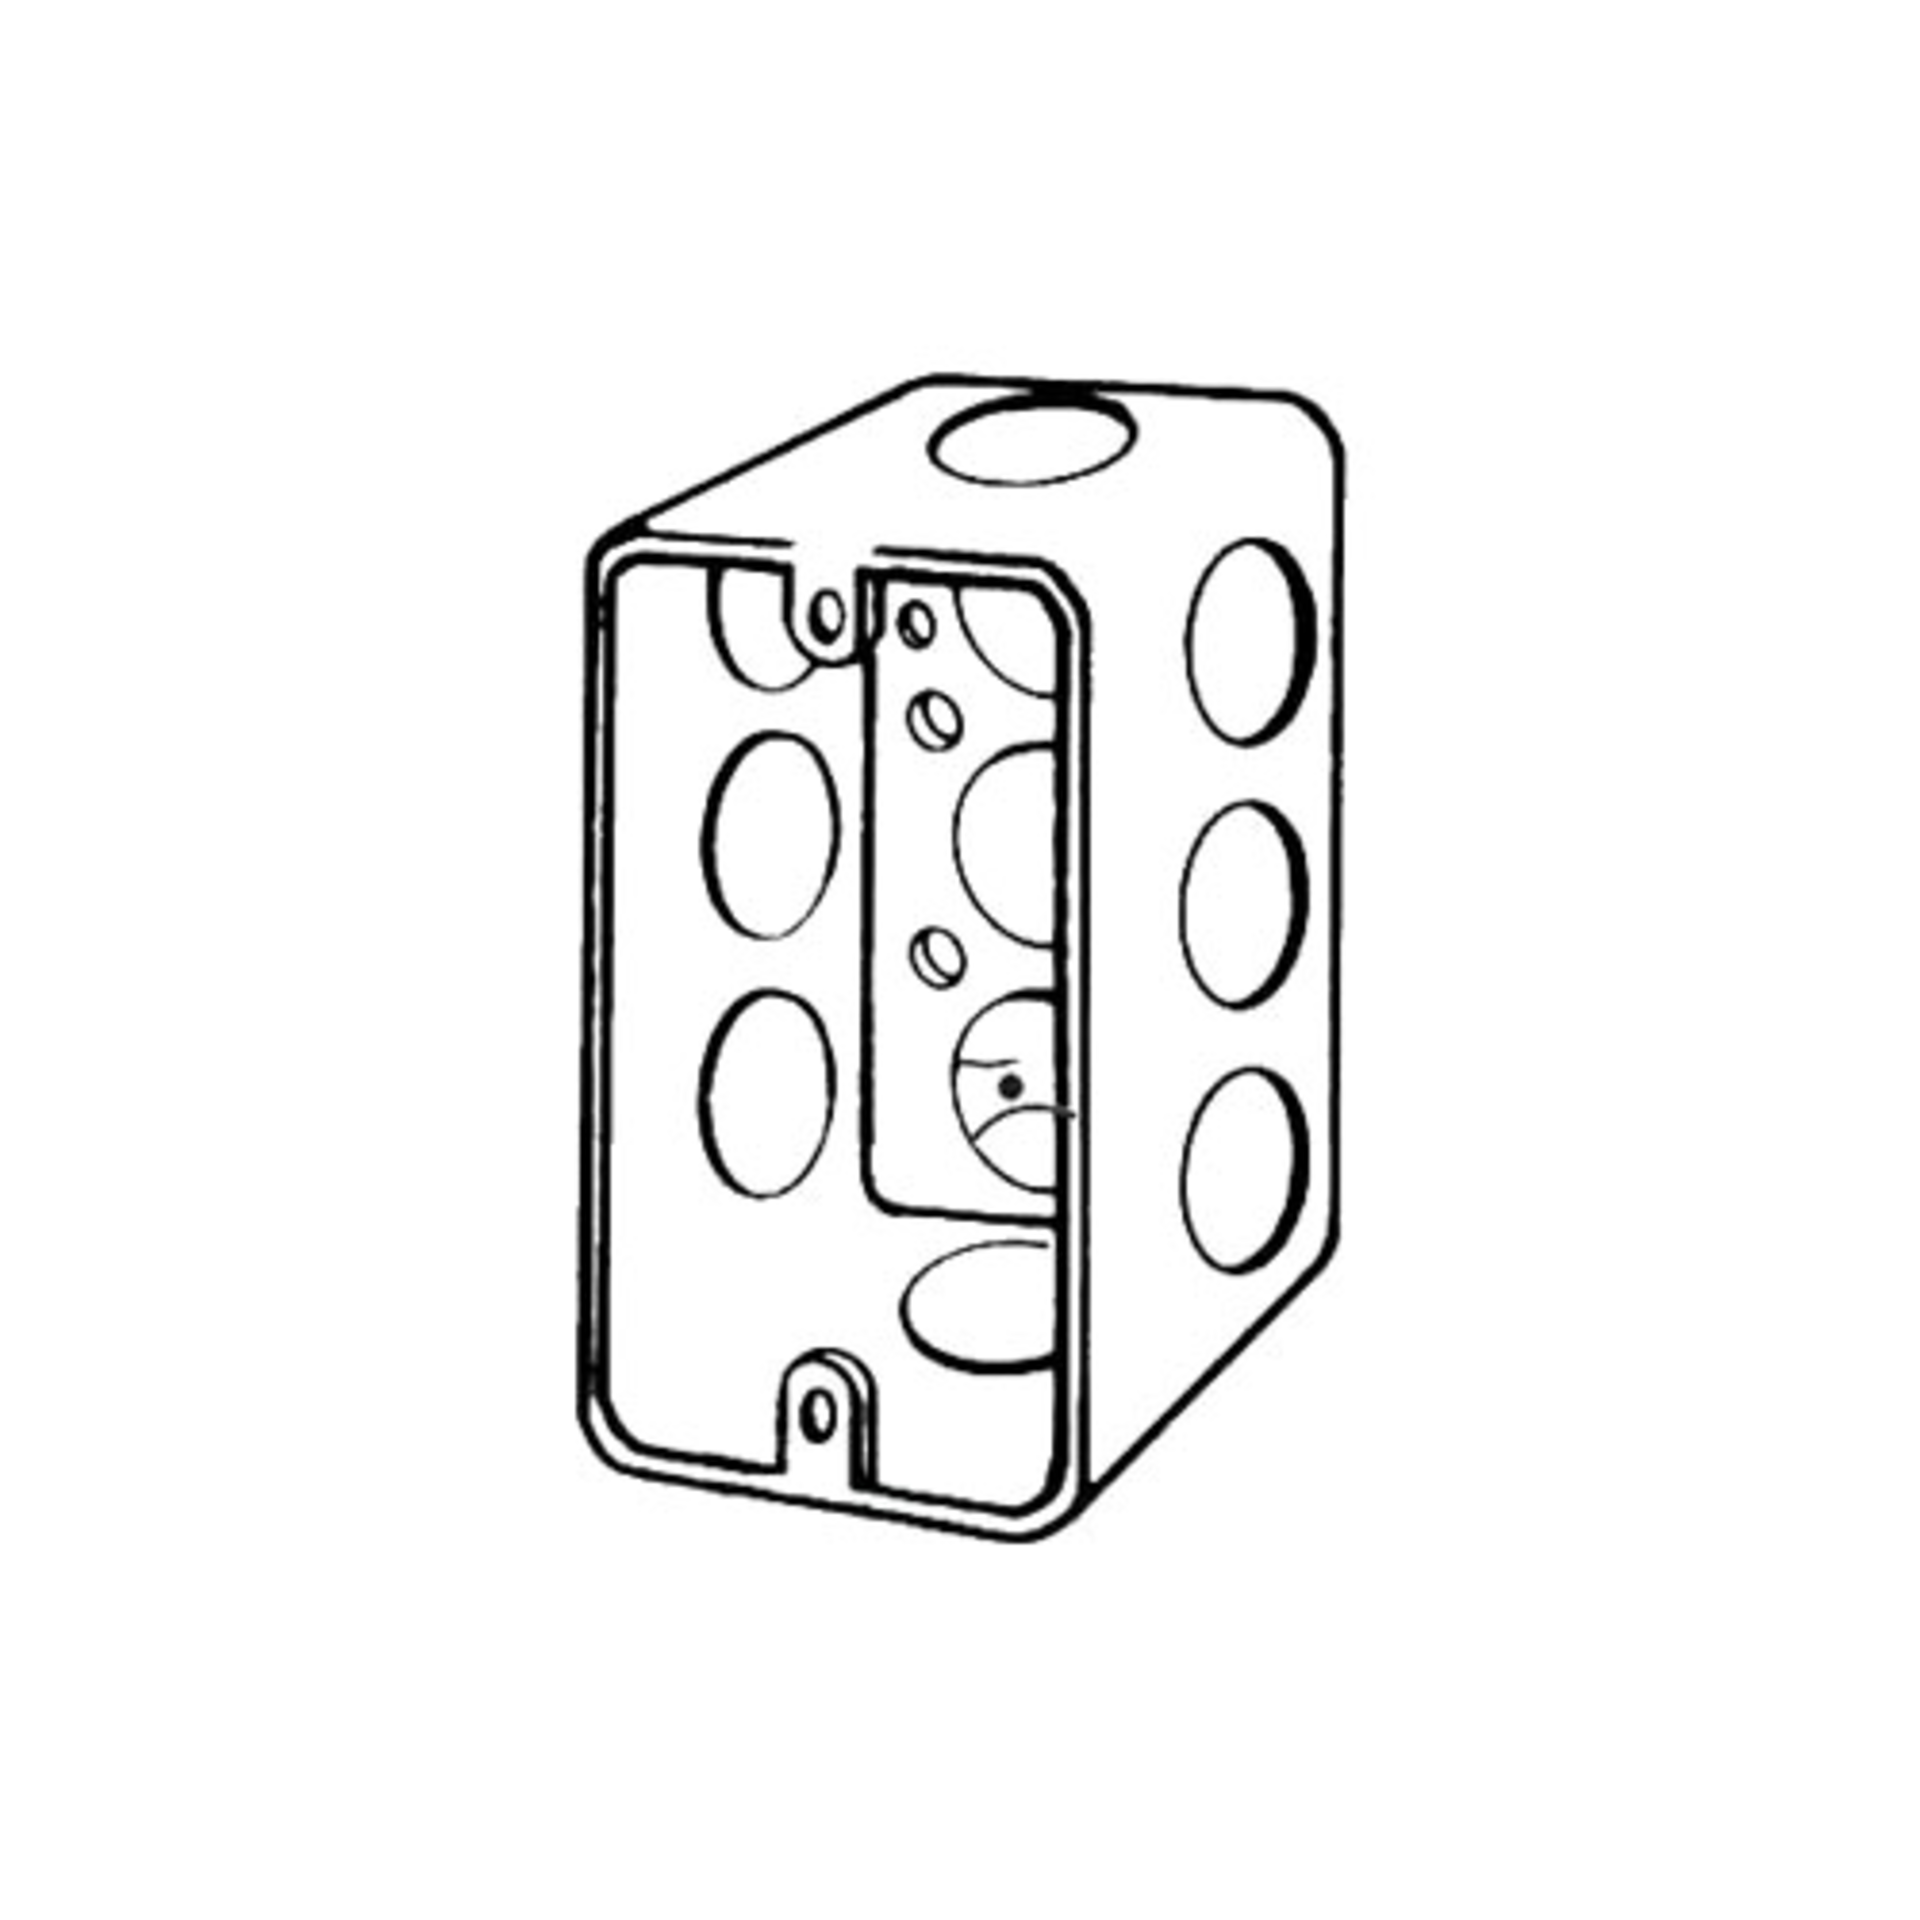 41x Emerson 181-1/2 Switch Accessories Handy Box